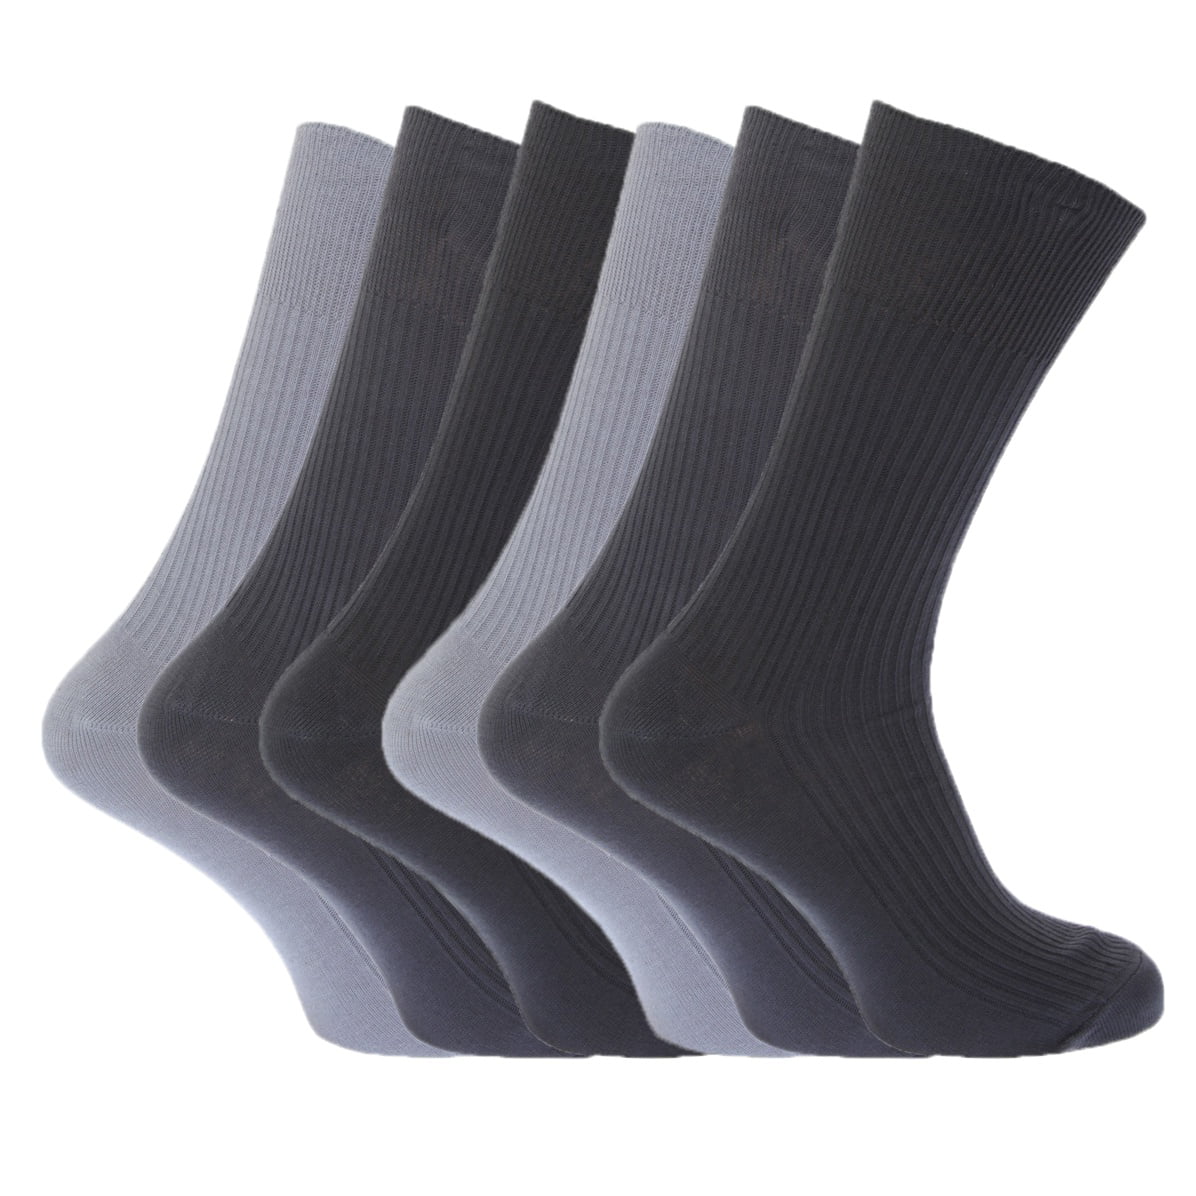 New Men's Socks Non Elastic Soft Top Diabetic Fashion 100% Cotton 3,6,12 pairs 